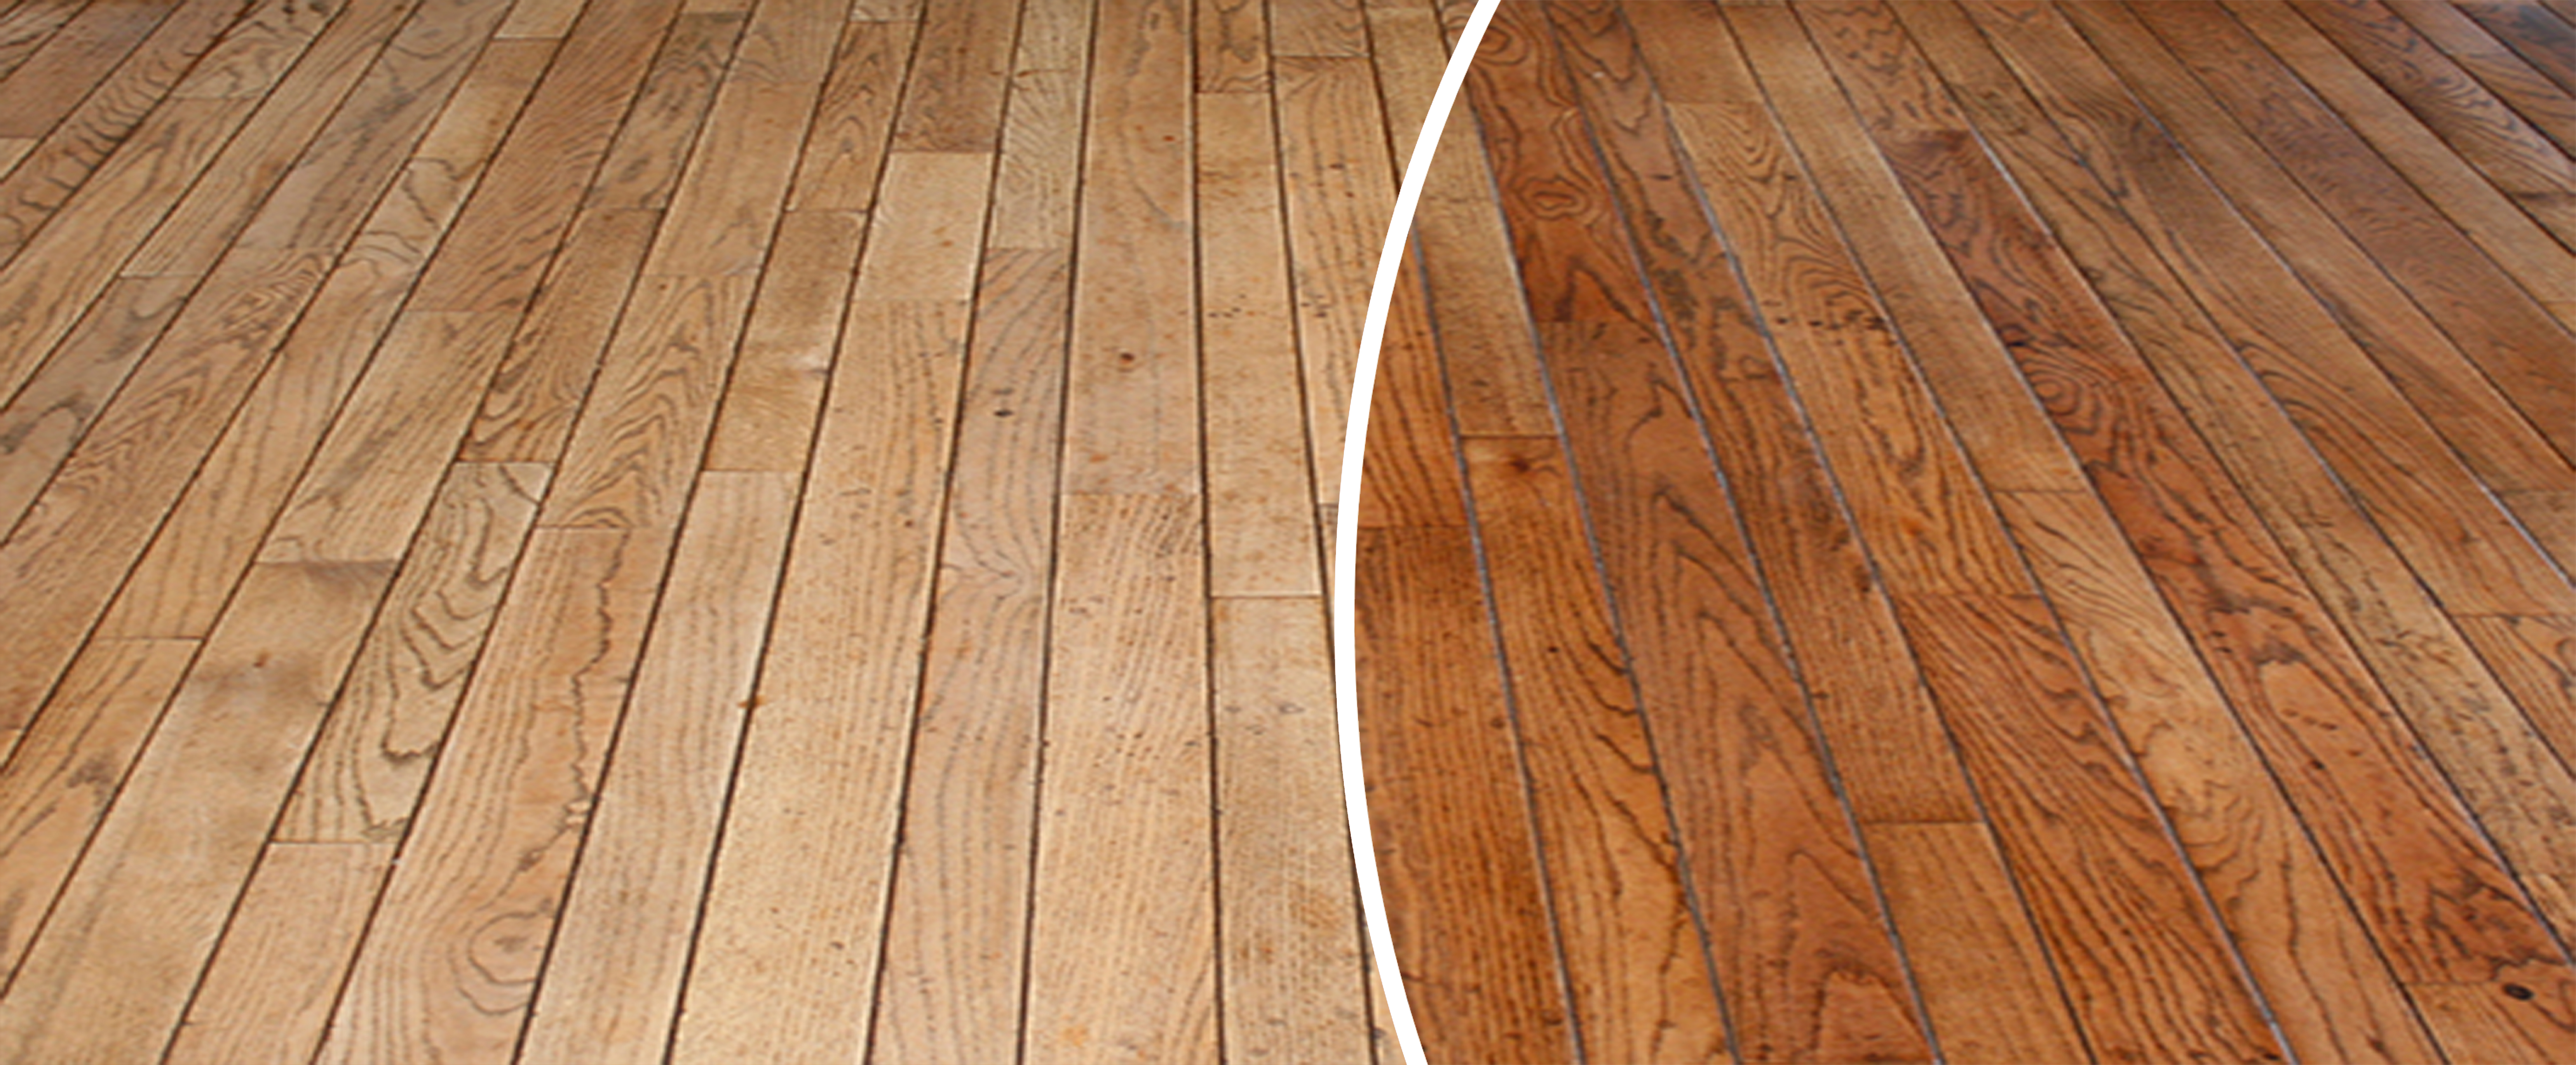 Hardwood Refinishing Restoration N, Hardwood Flooring Franchise